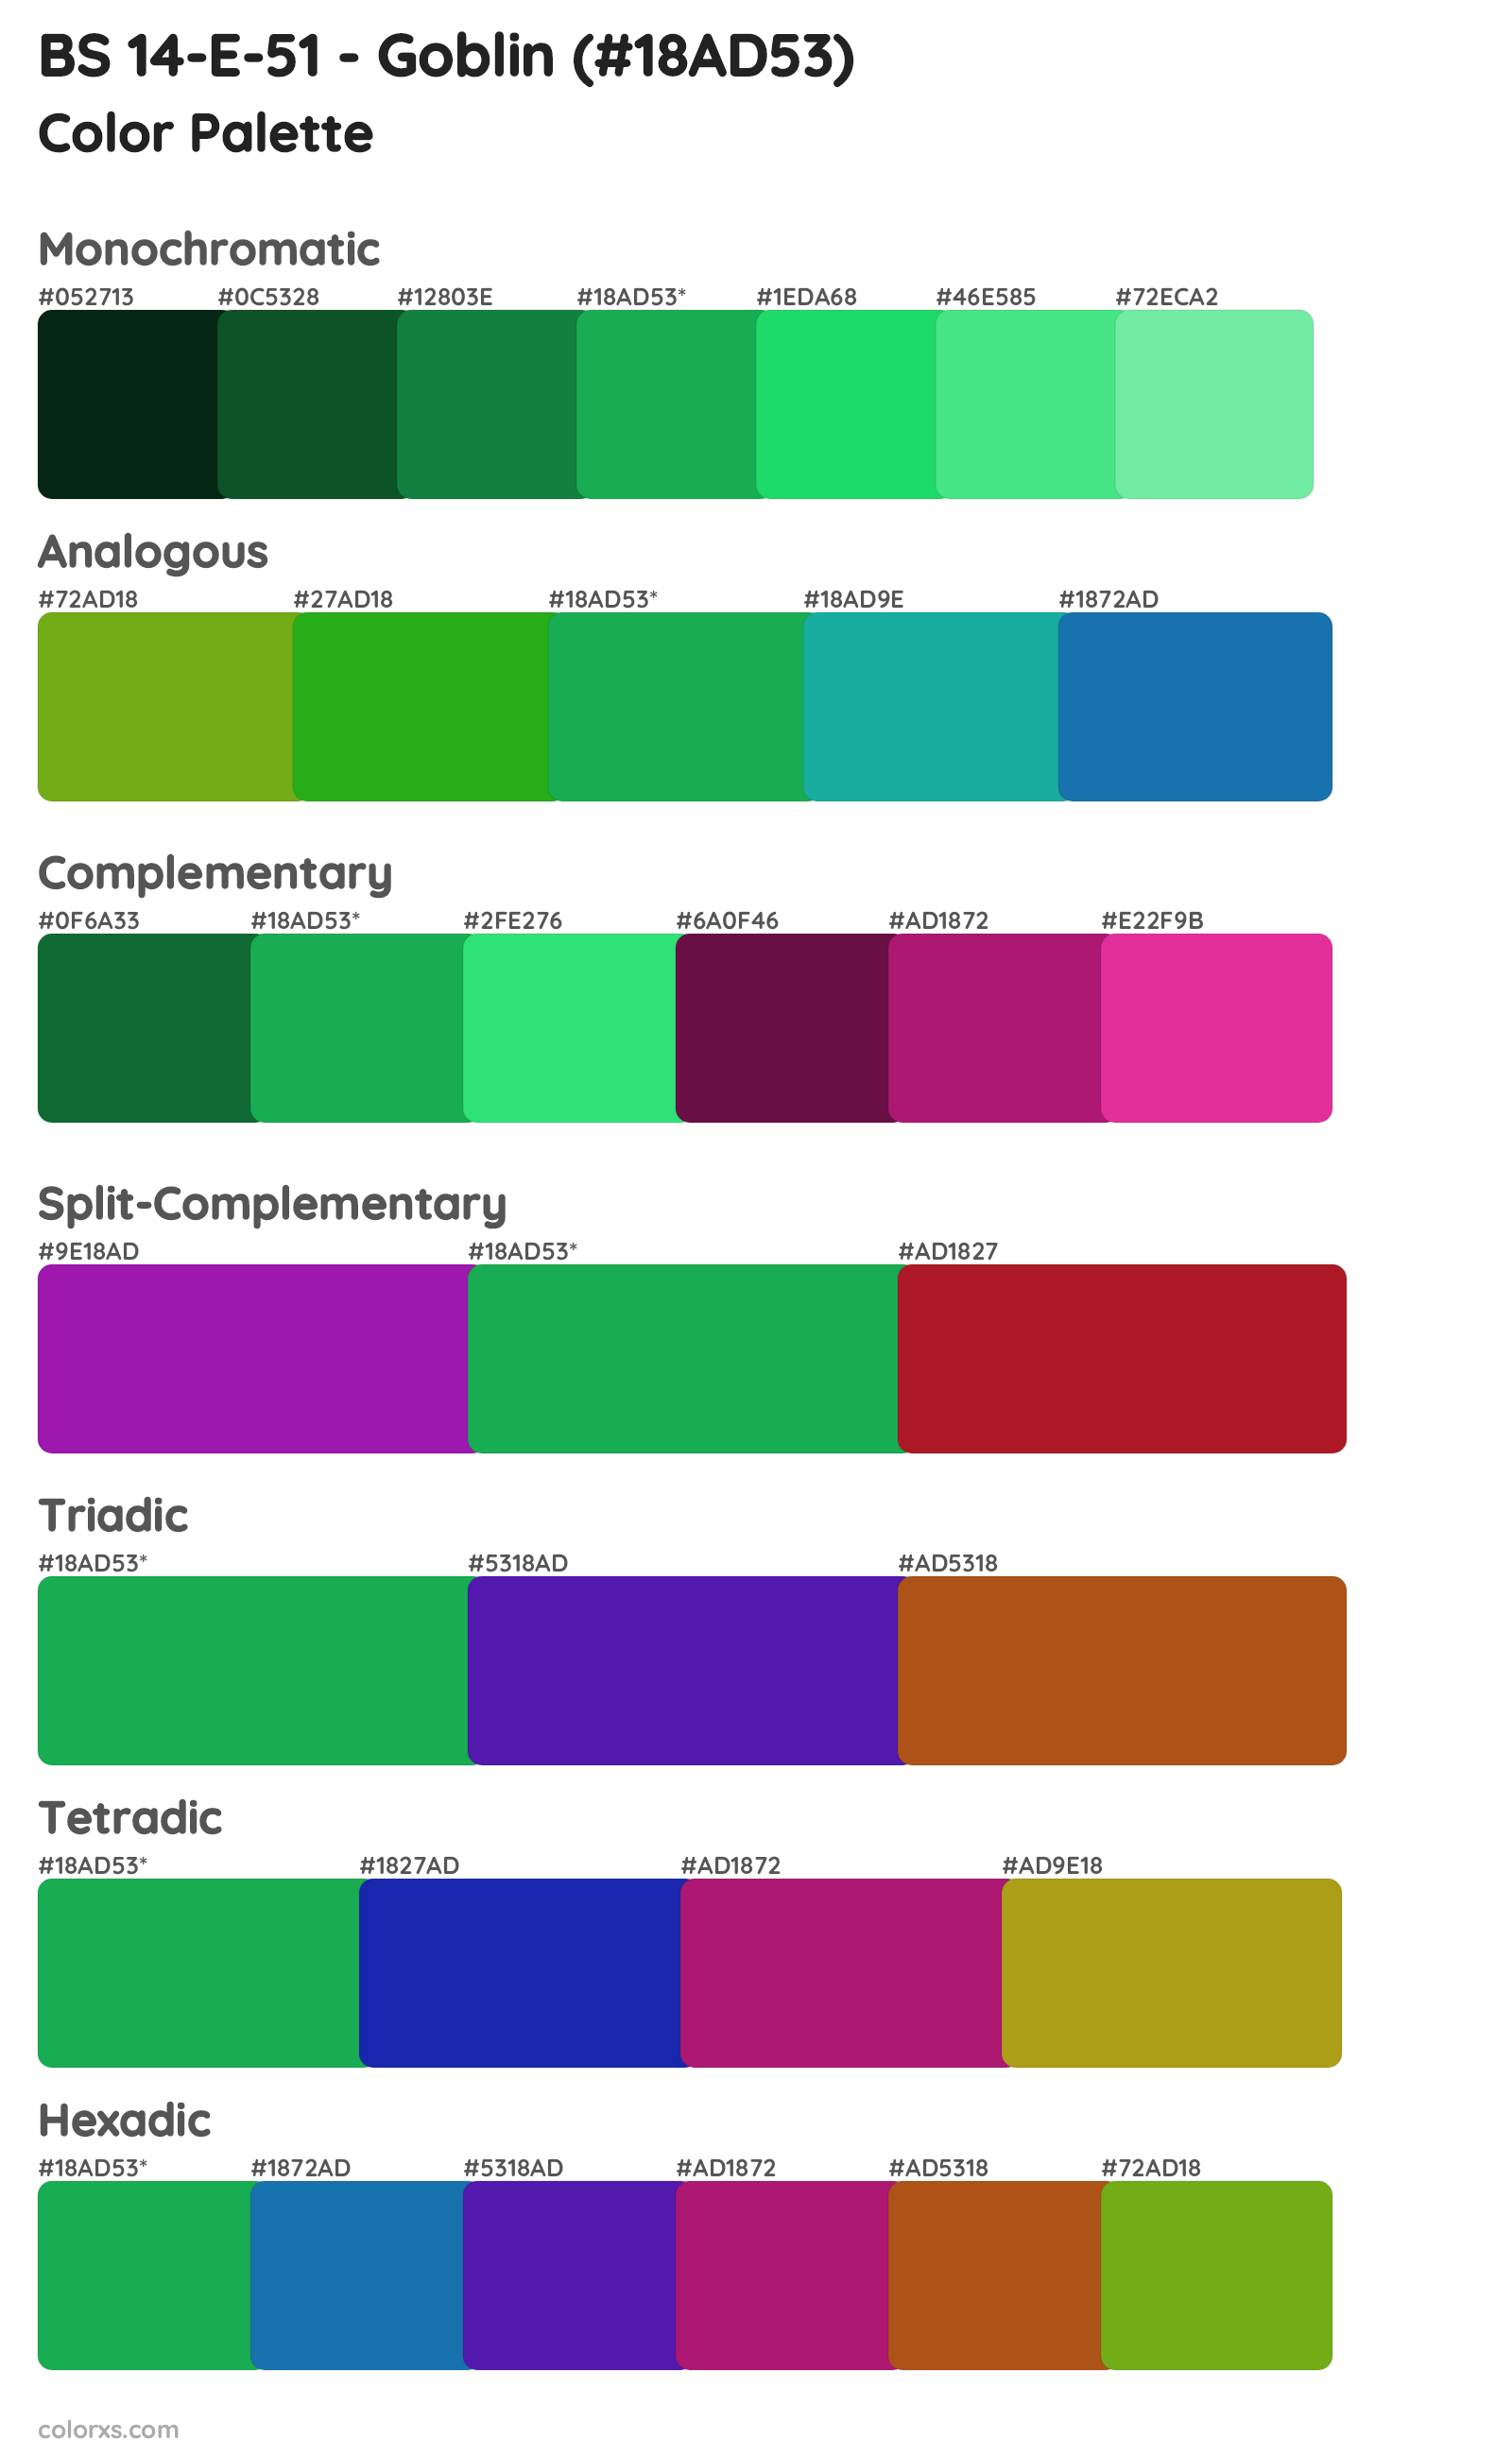 BS 14-E-51 - Goblin Color Scheme Palettes